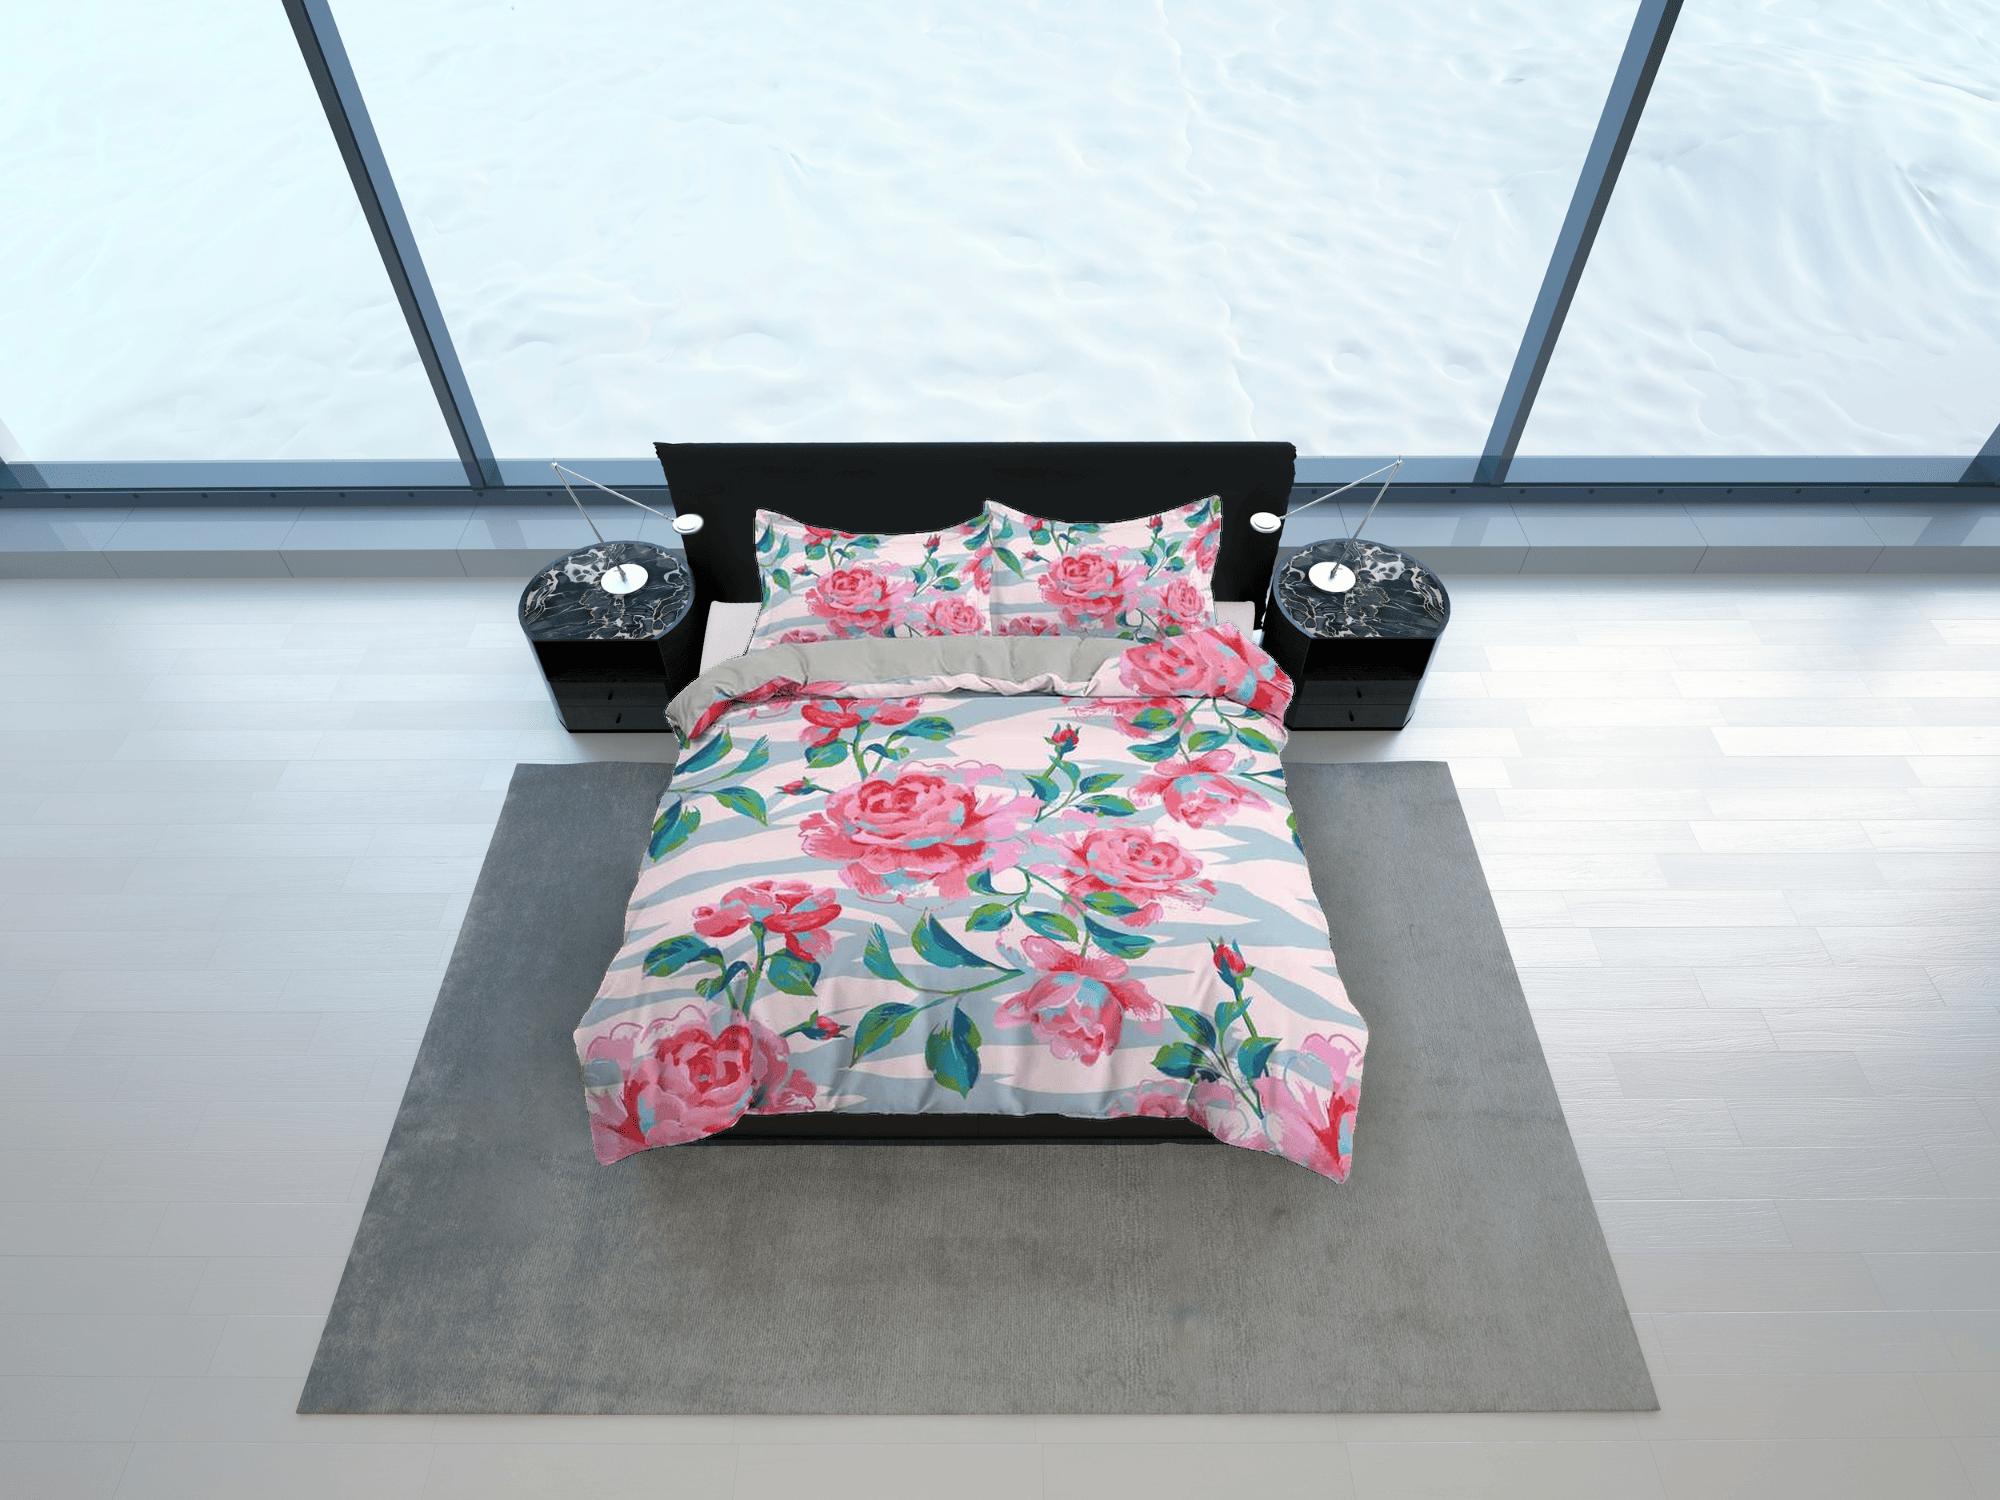 daintyduvet Pink carnation floral duvet cover colorful bedding, teen girl bedroom, baby girl crib bedding boho maximalist bedspread aesthetic bedding